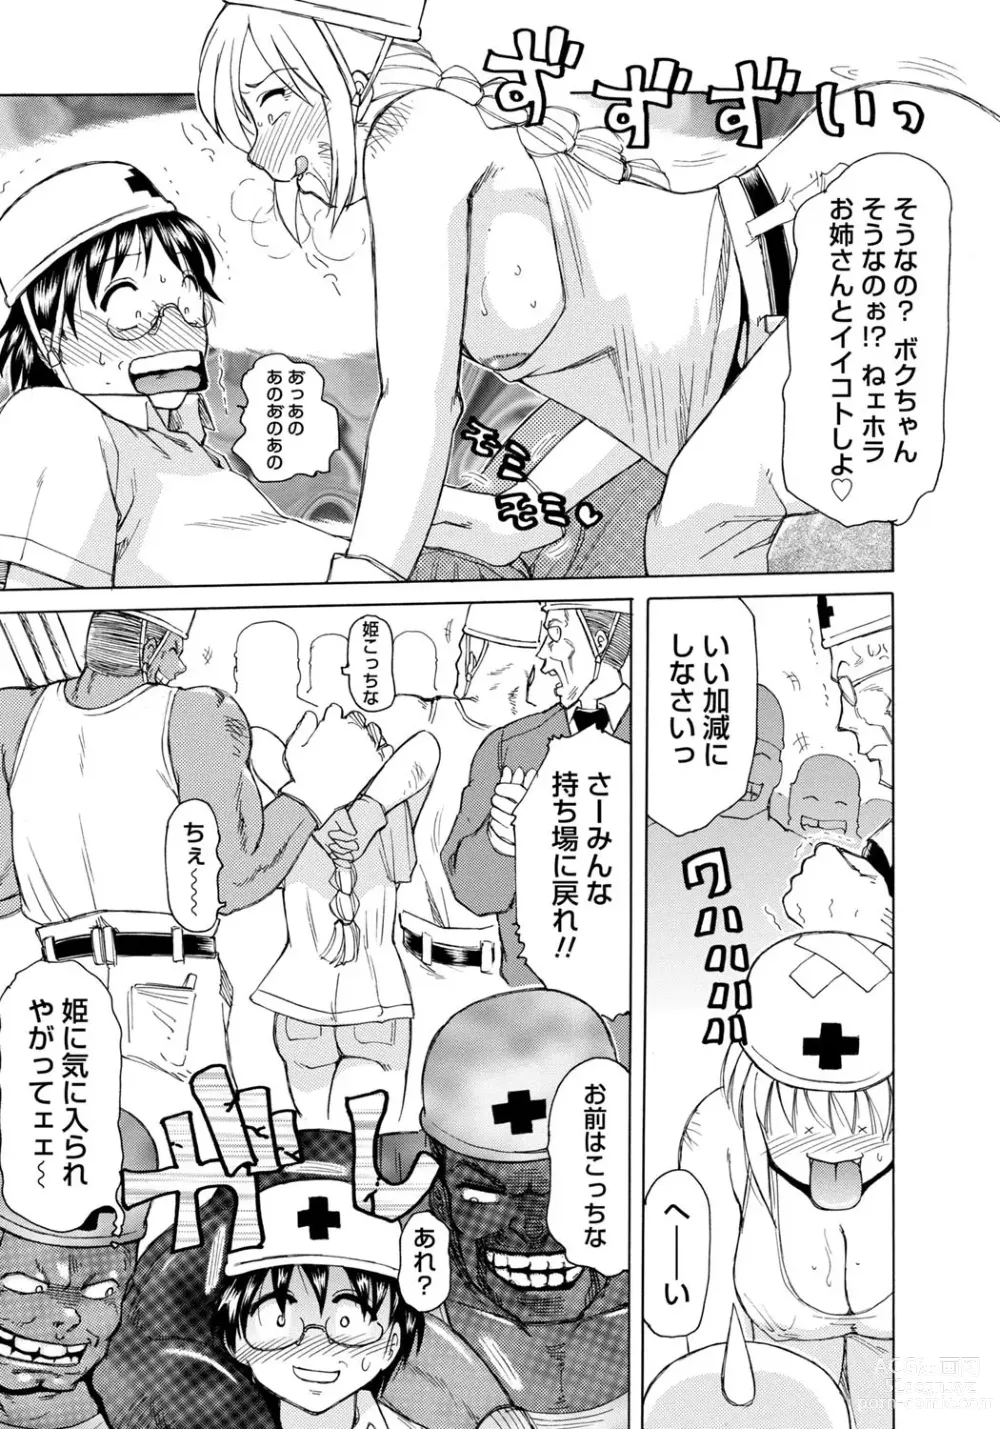 Page 8 of manga Inen Gangu Hime Naburi